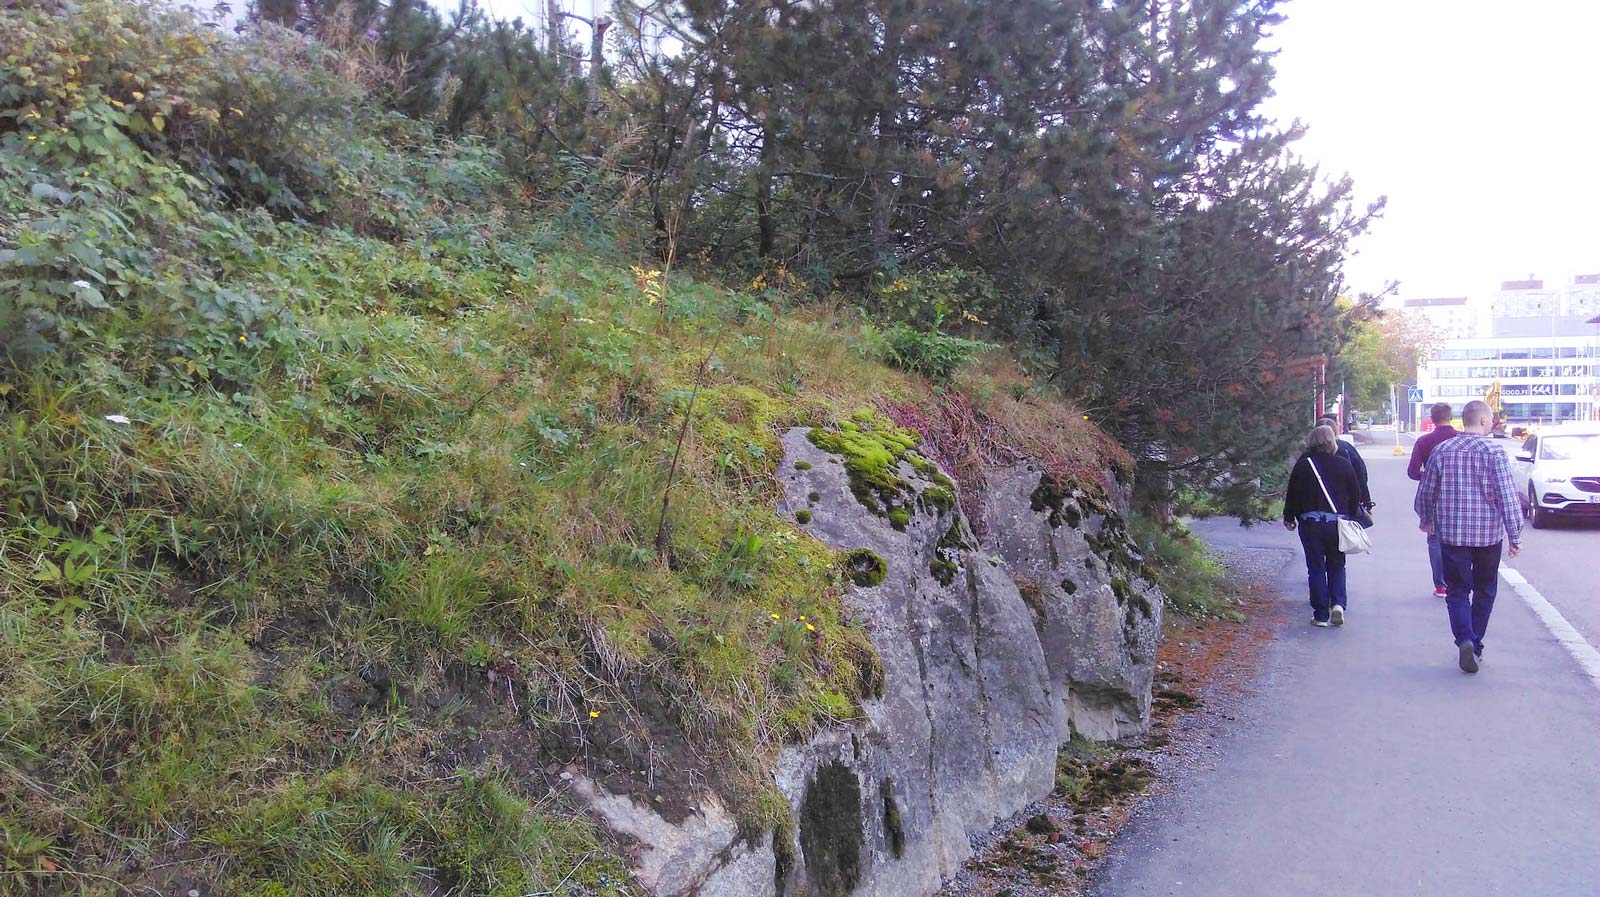 Finnish nature - rocks and moss